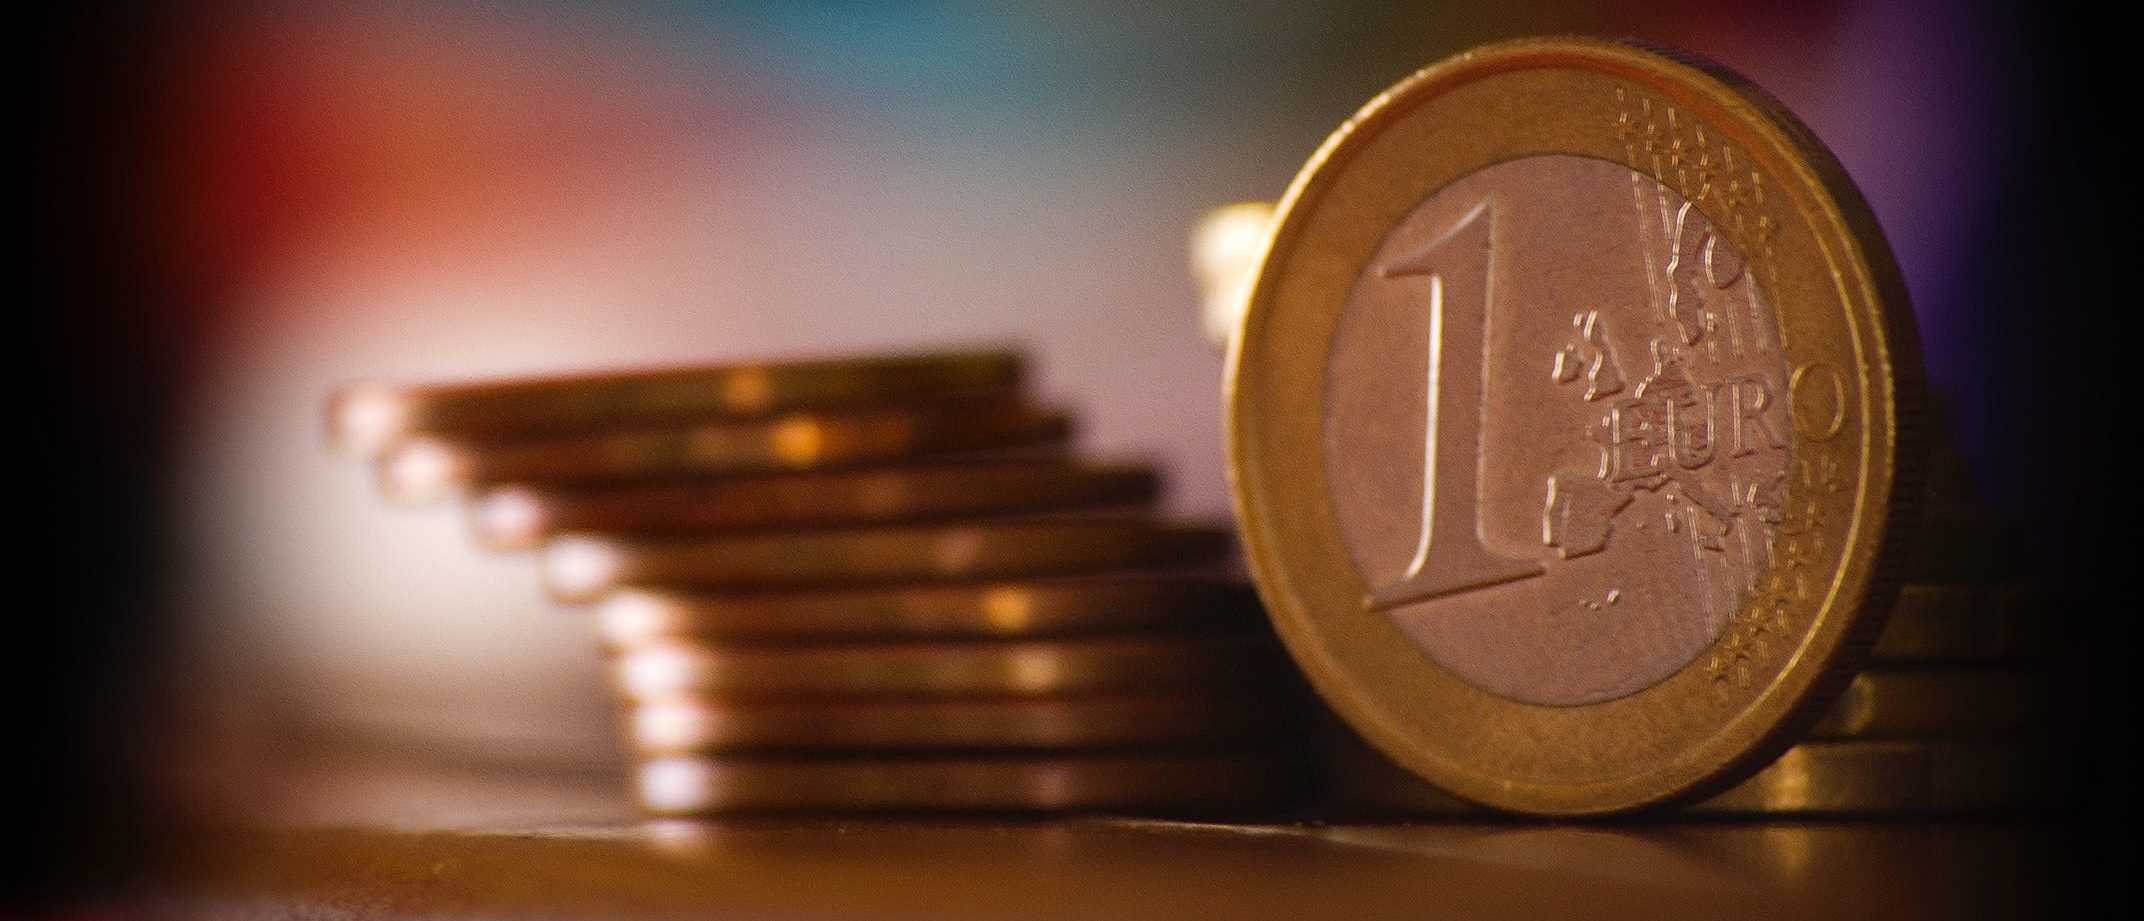 1000 € in bitcoin investieren investiere in bitcoin kanada